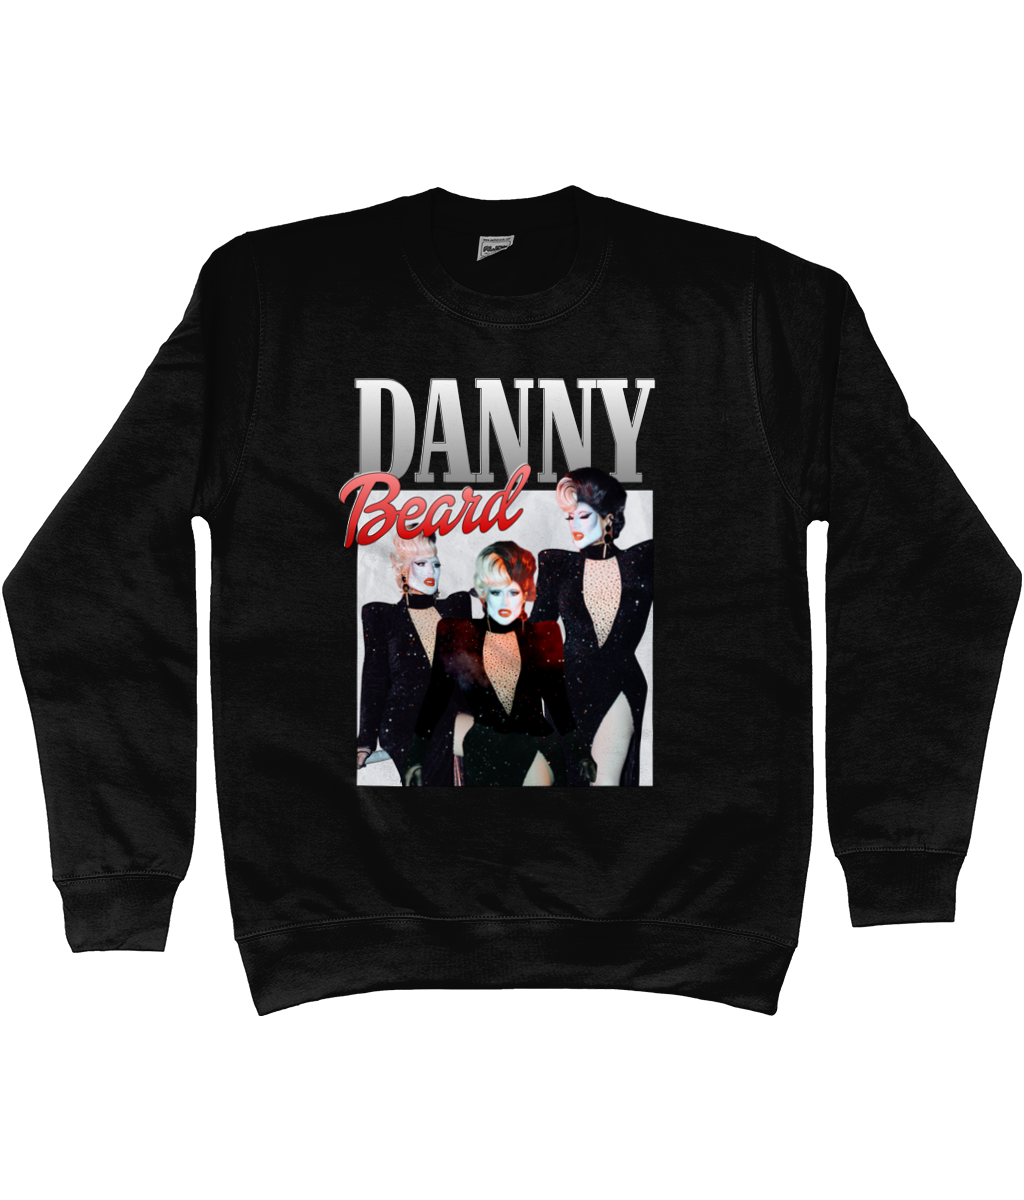 NEW Danny Beard Sweatshirt